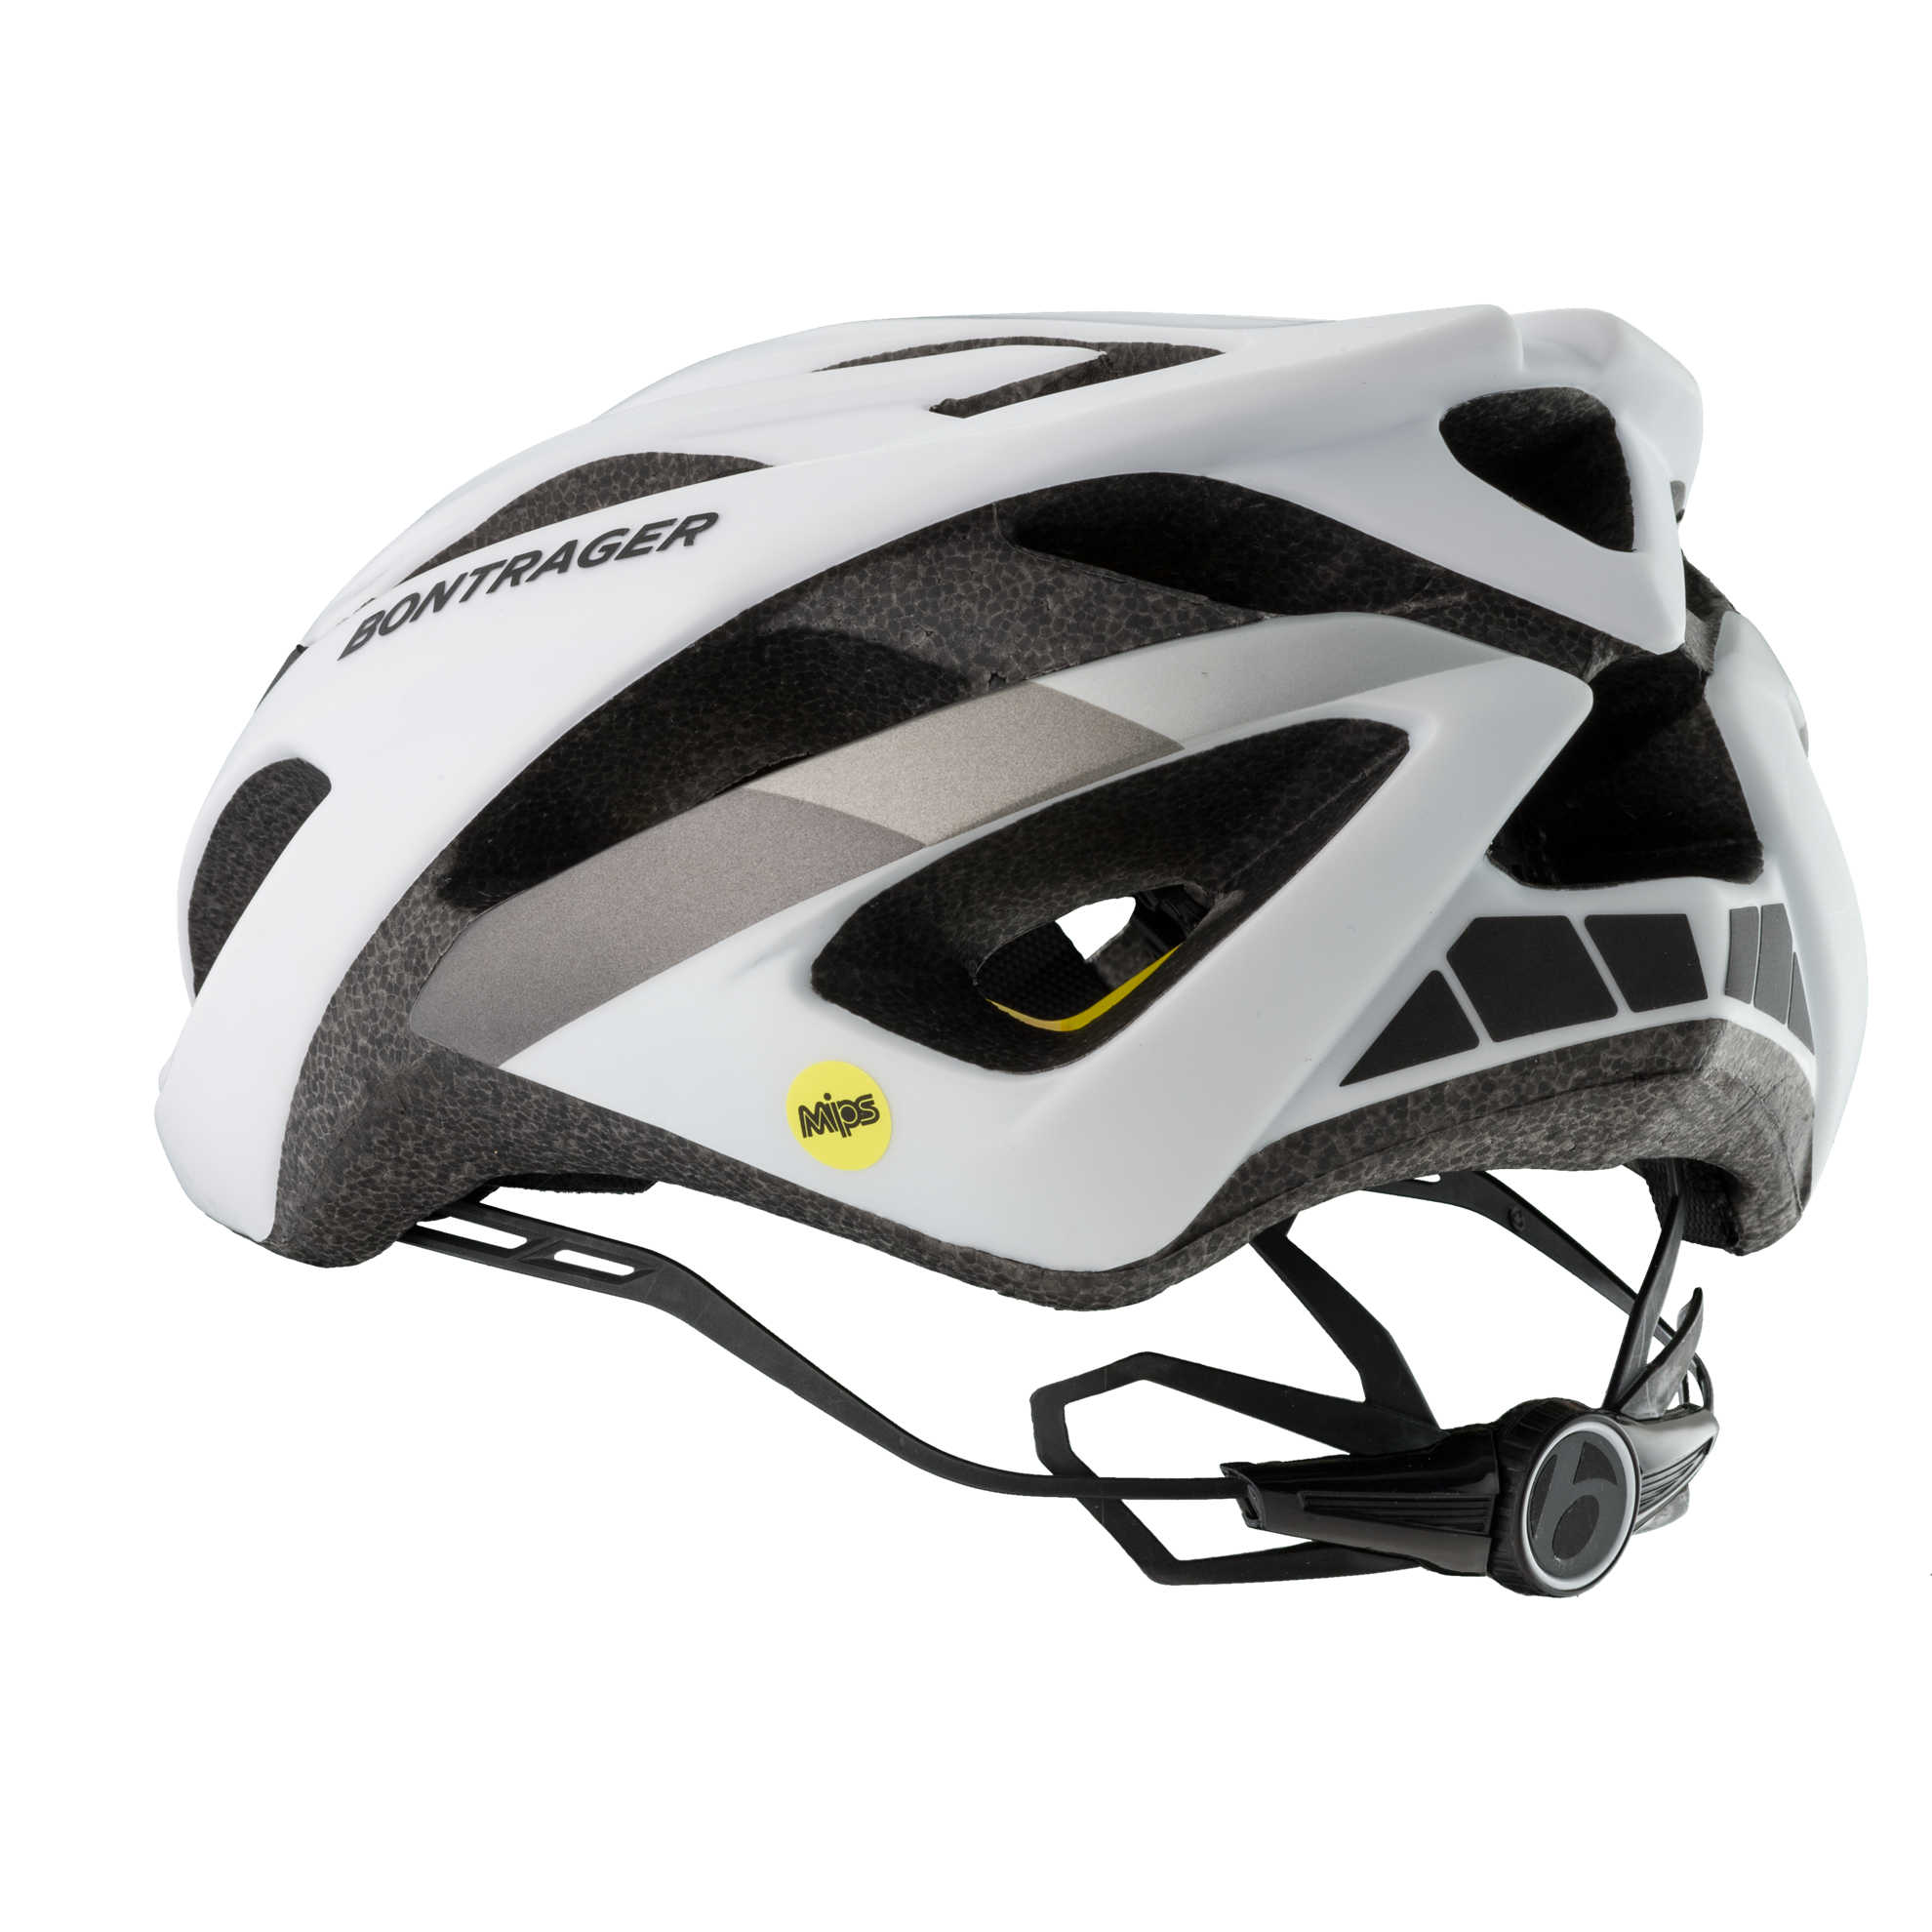 bontrager starvos cycling helmet